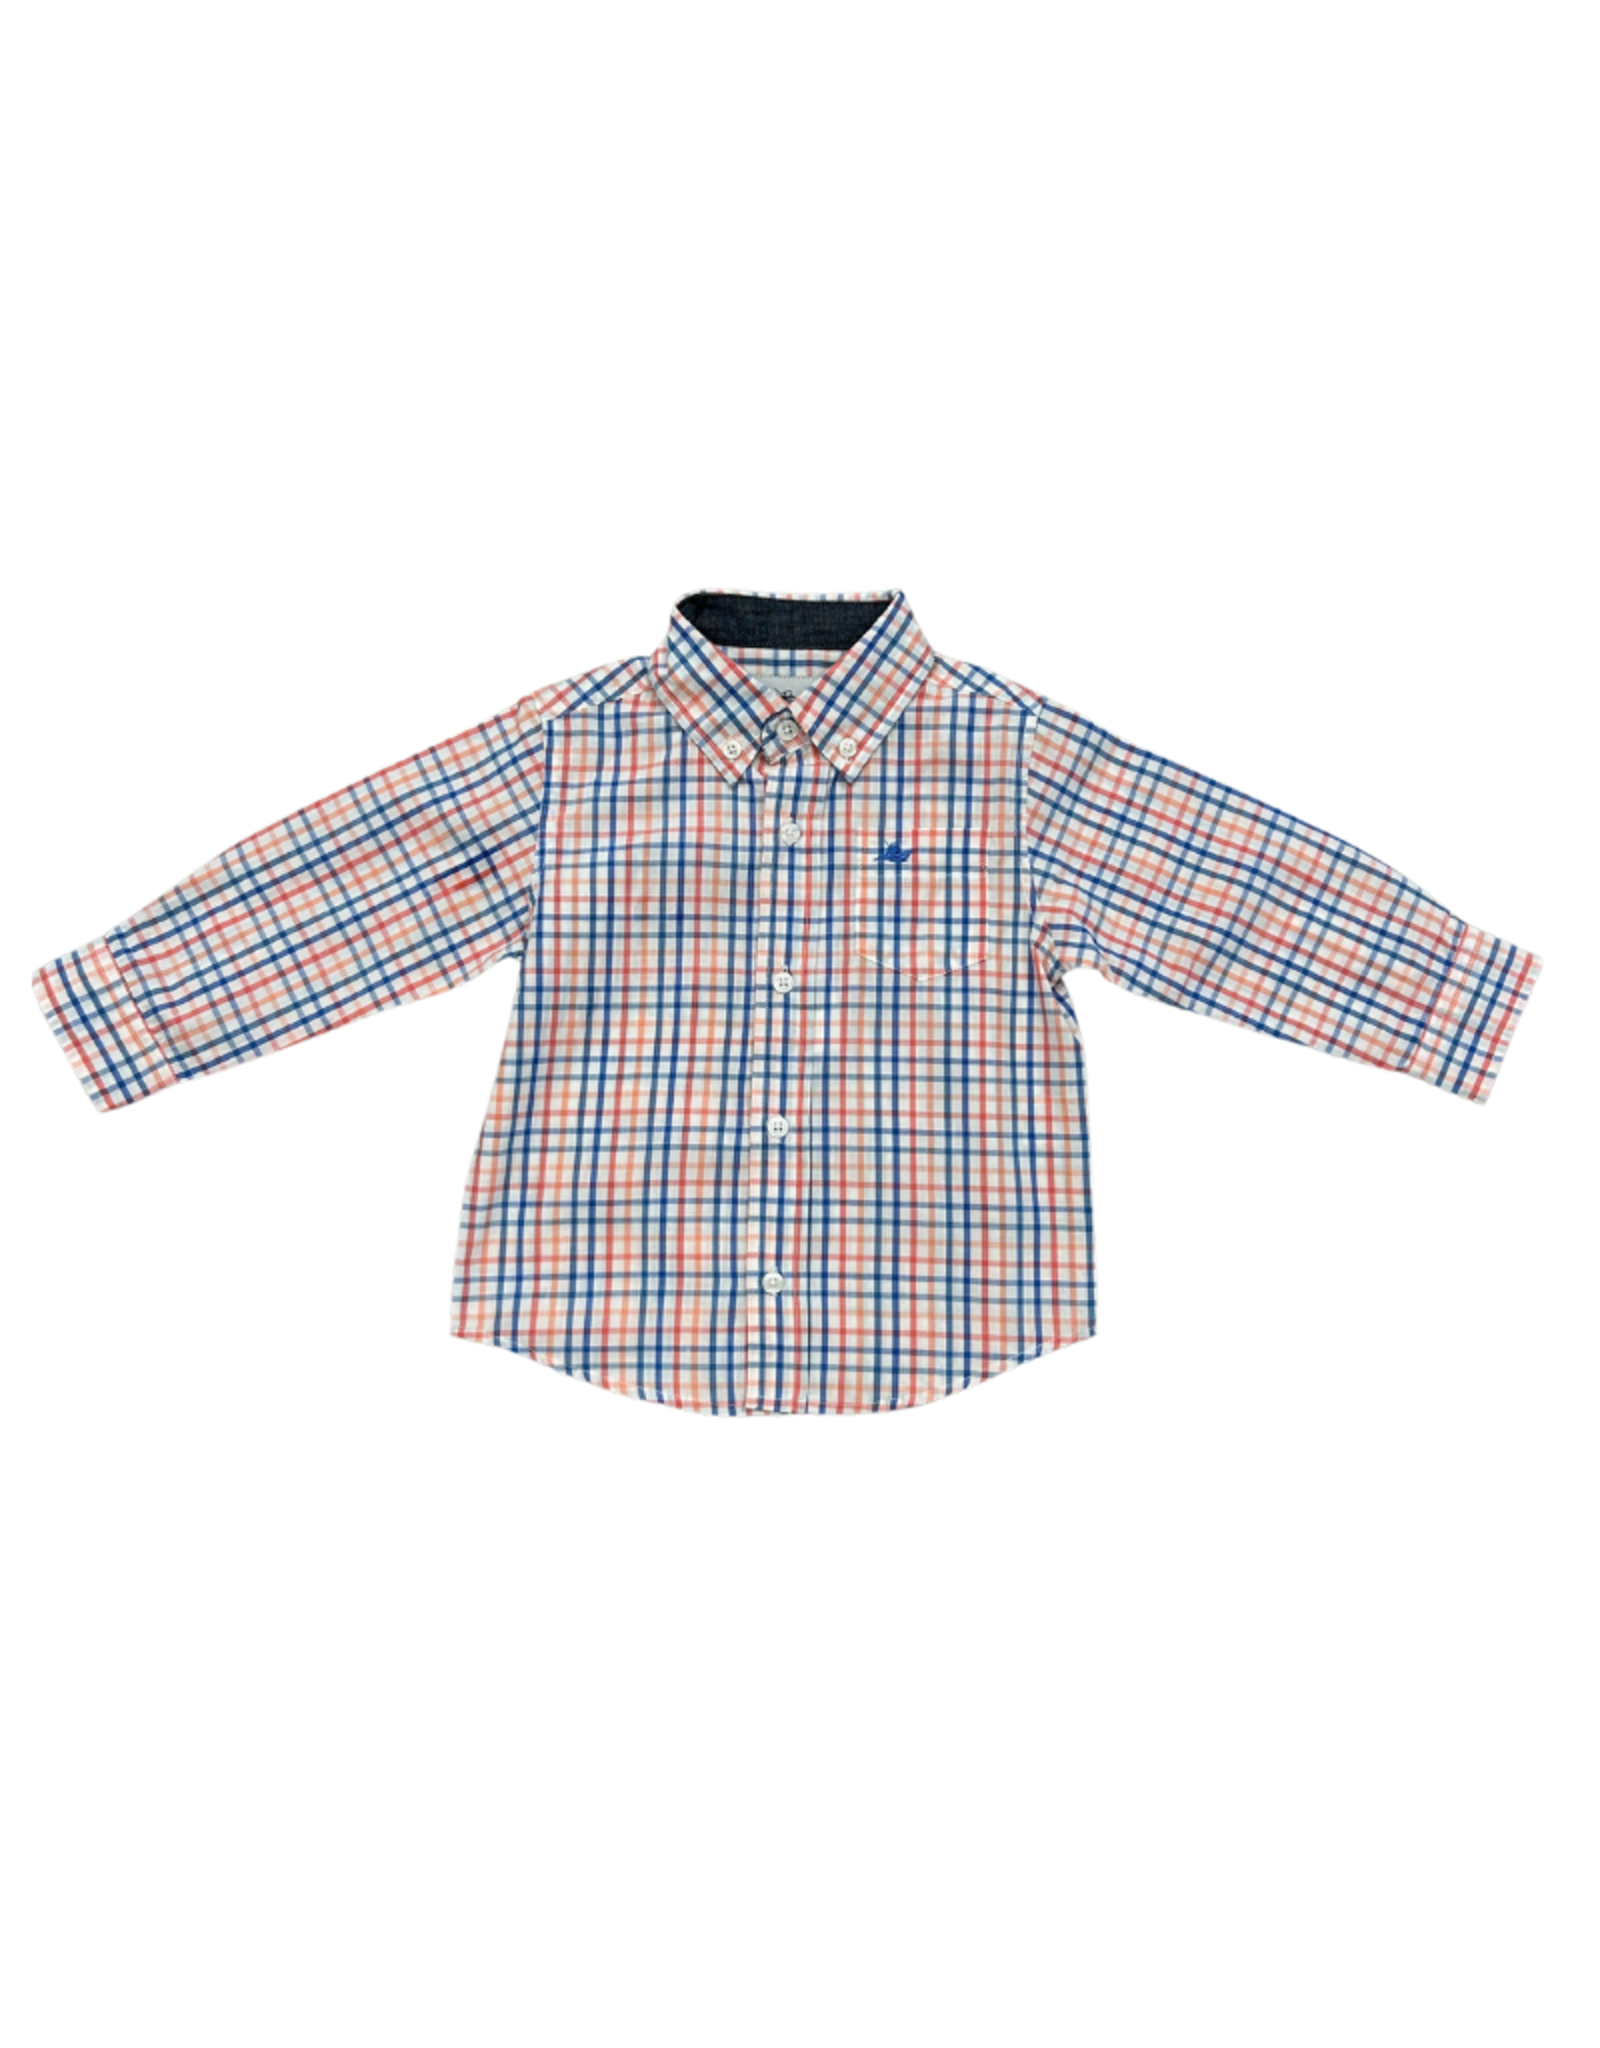 SouthBound Long Sleeve Dress Shirt - Regatta/Blue/Peach/Coral